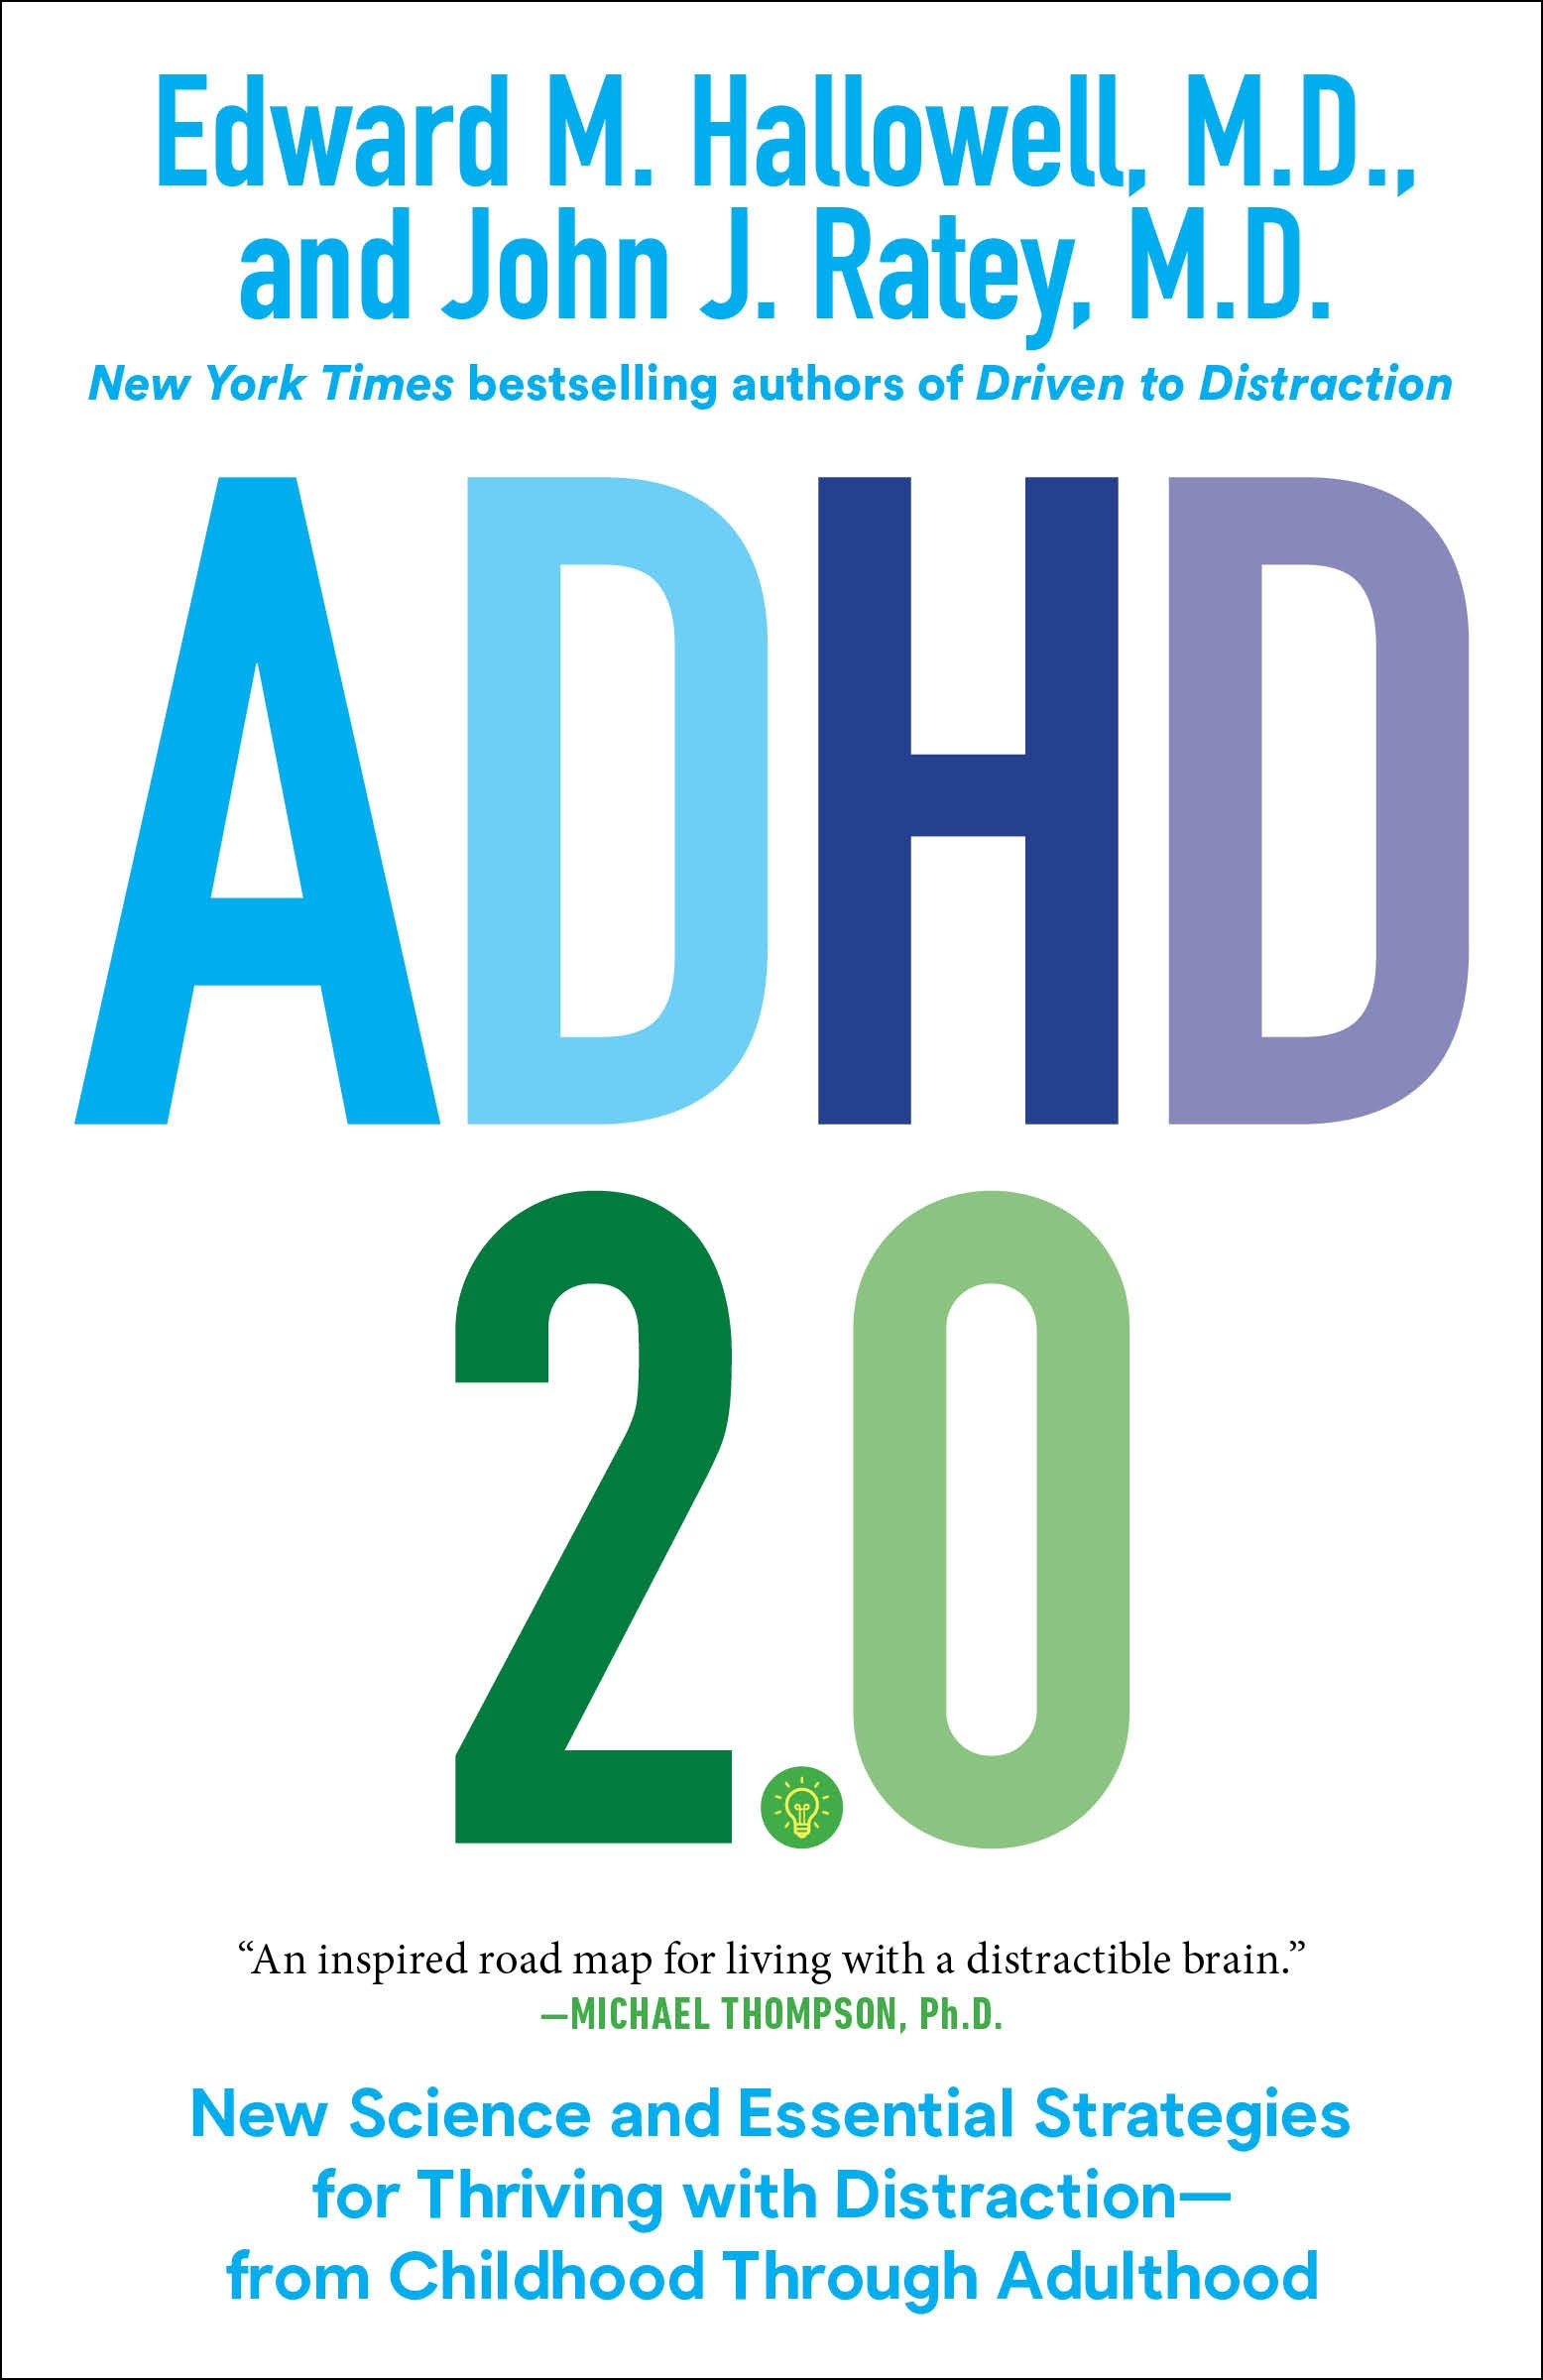 adhd 2.0 pdf free download